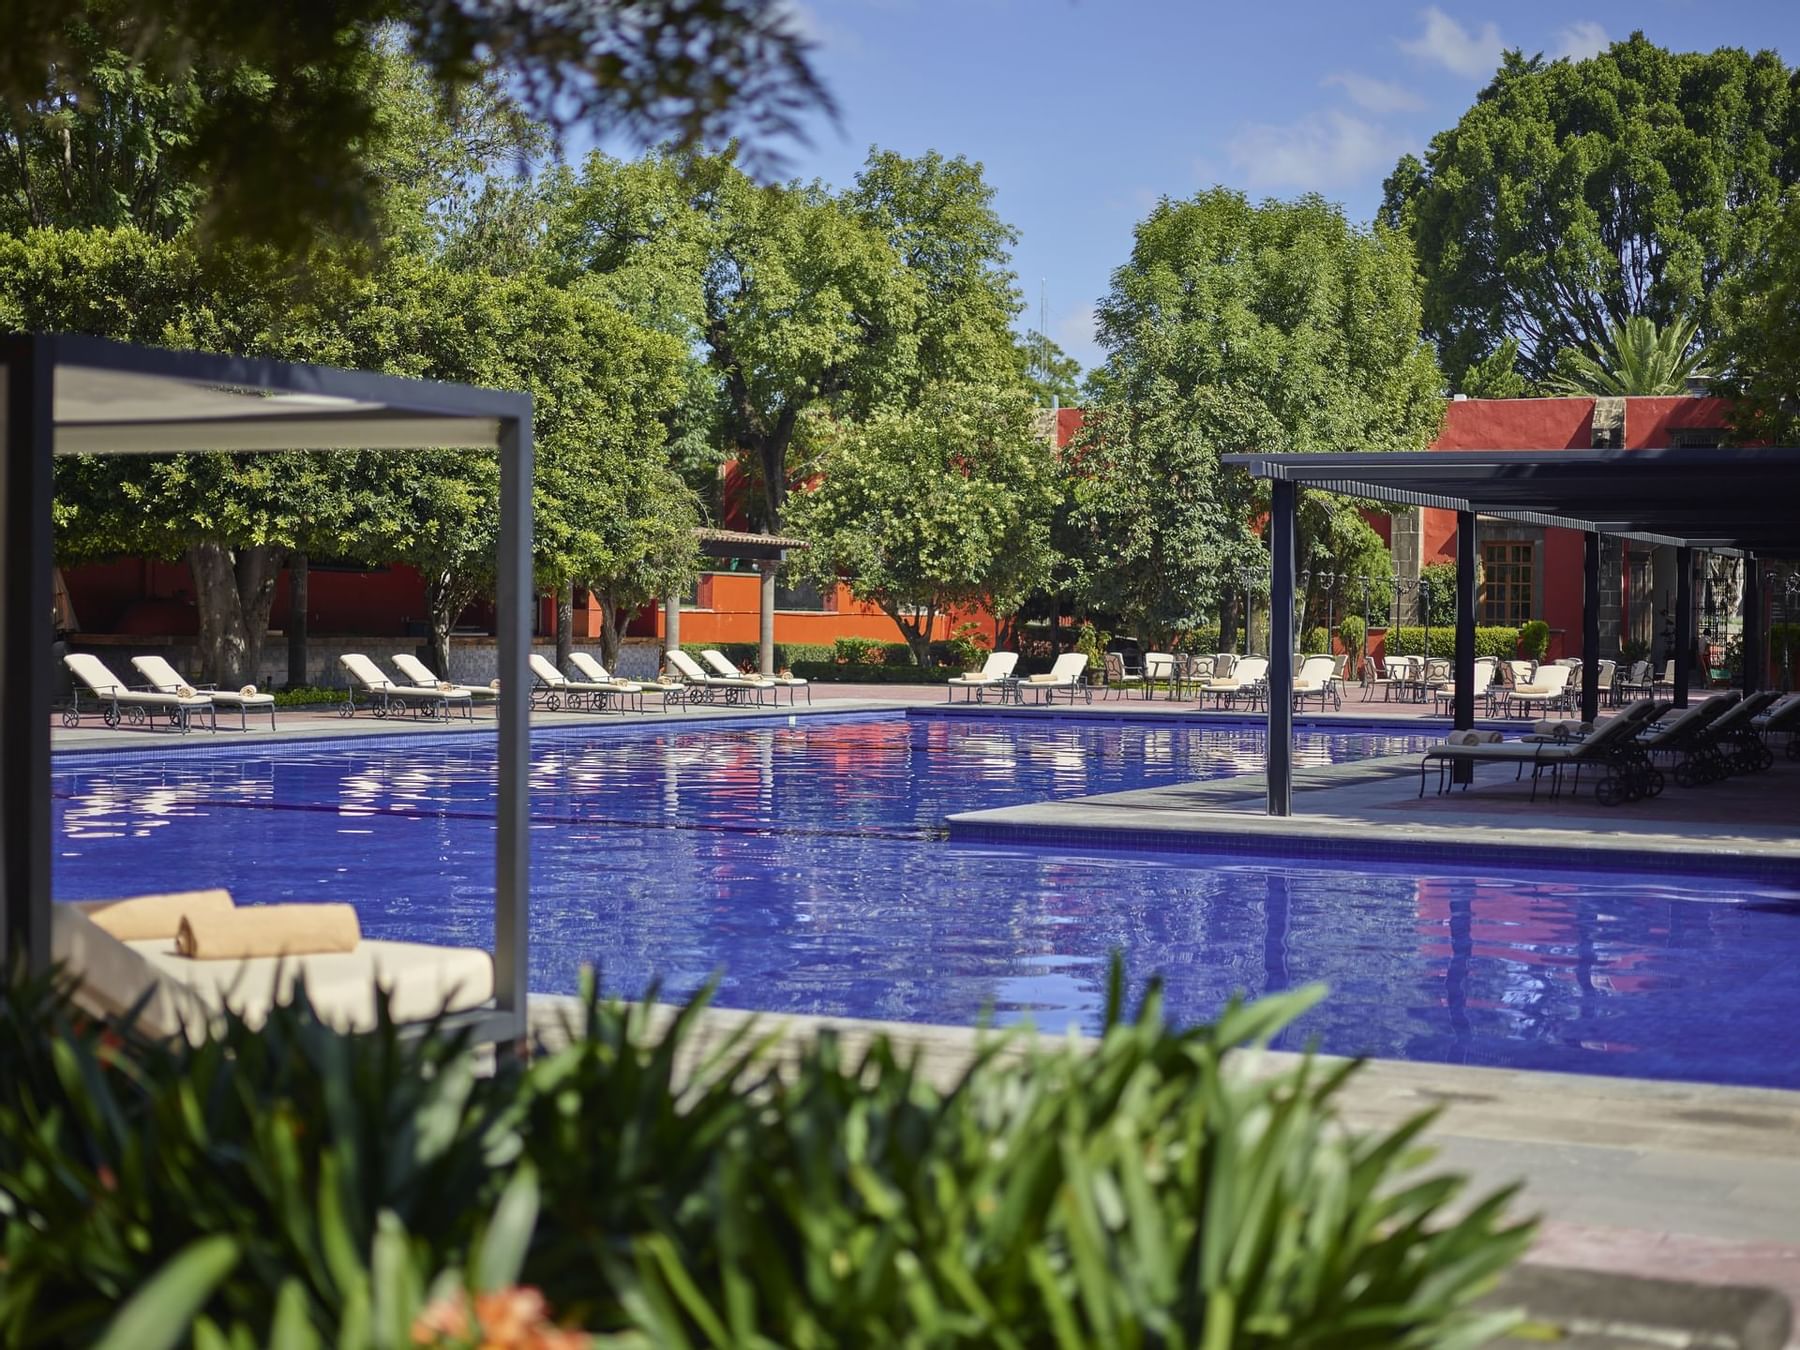 Outdoor pool area with sunbeds at Fiesta Americana Hacienda